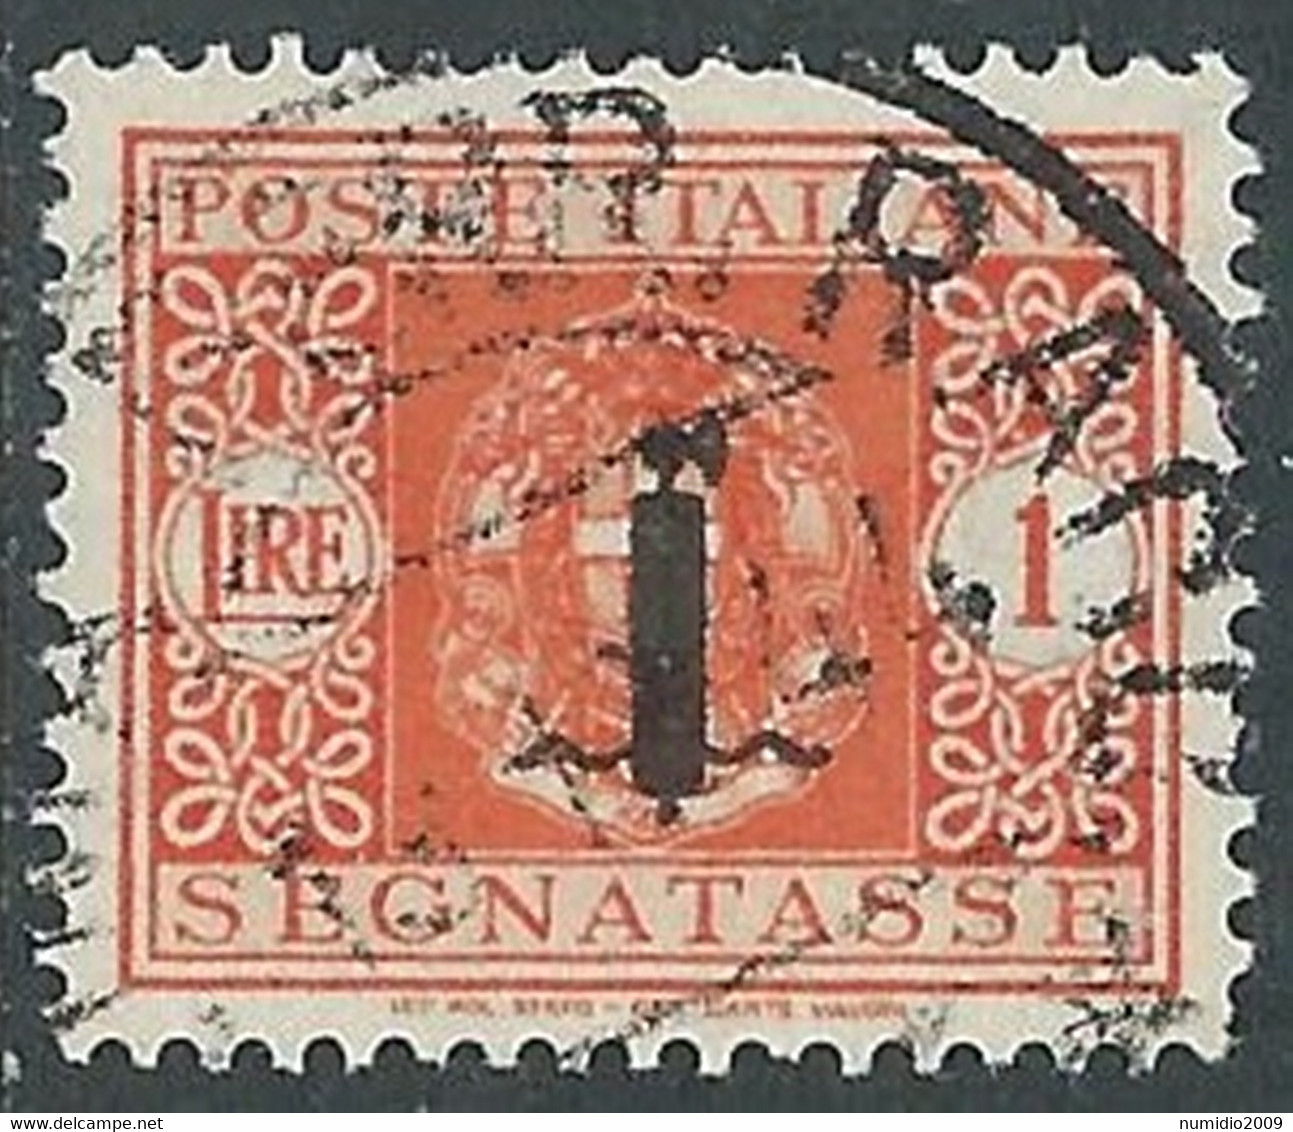 1944 RSI SEGNATASSE USATO 1 LIRA - RE28-10 - Postage Due